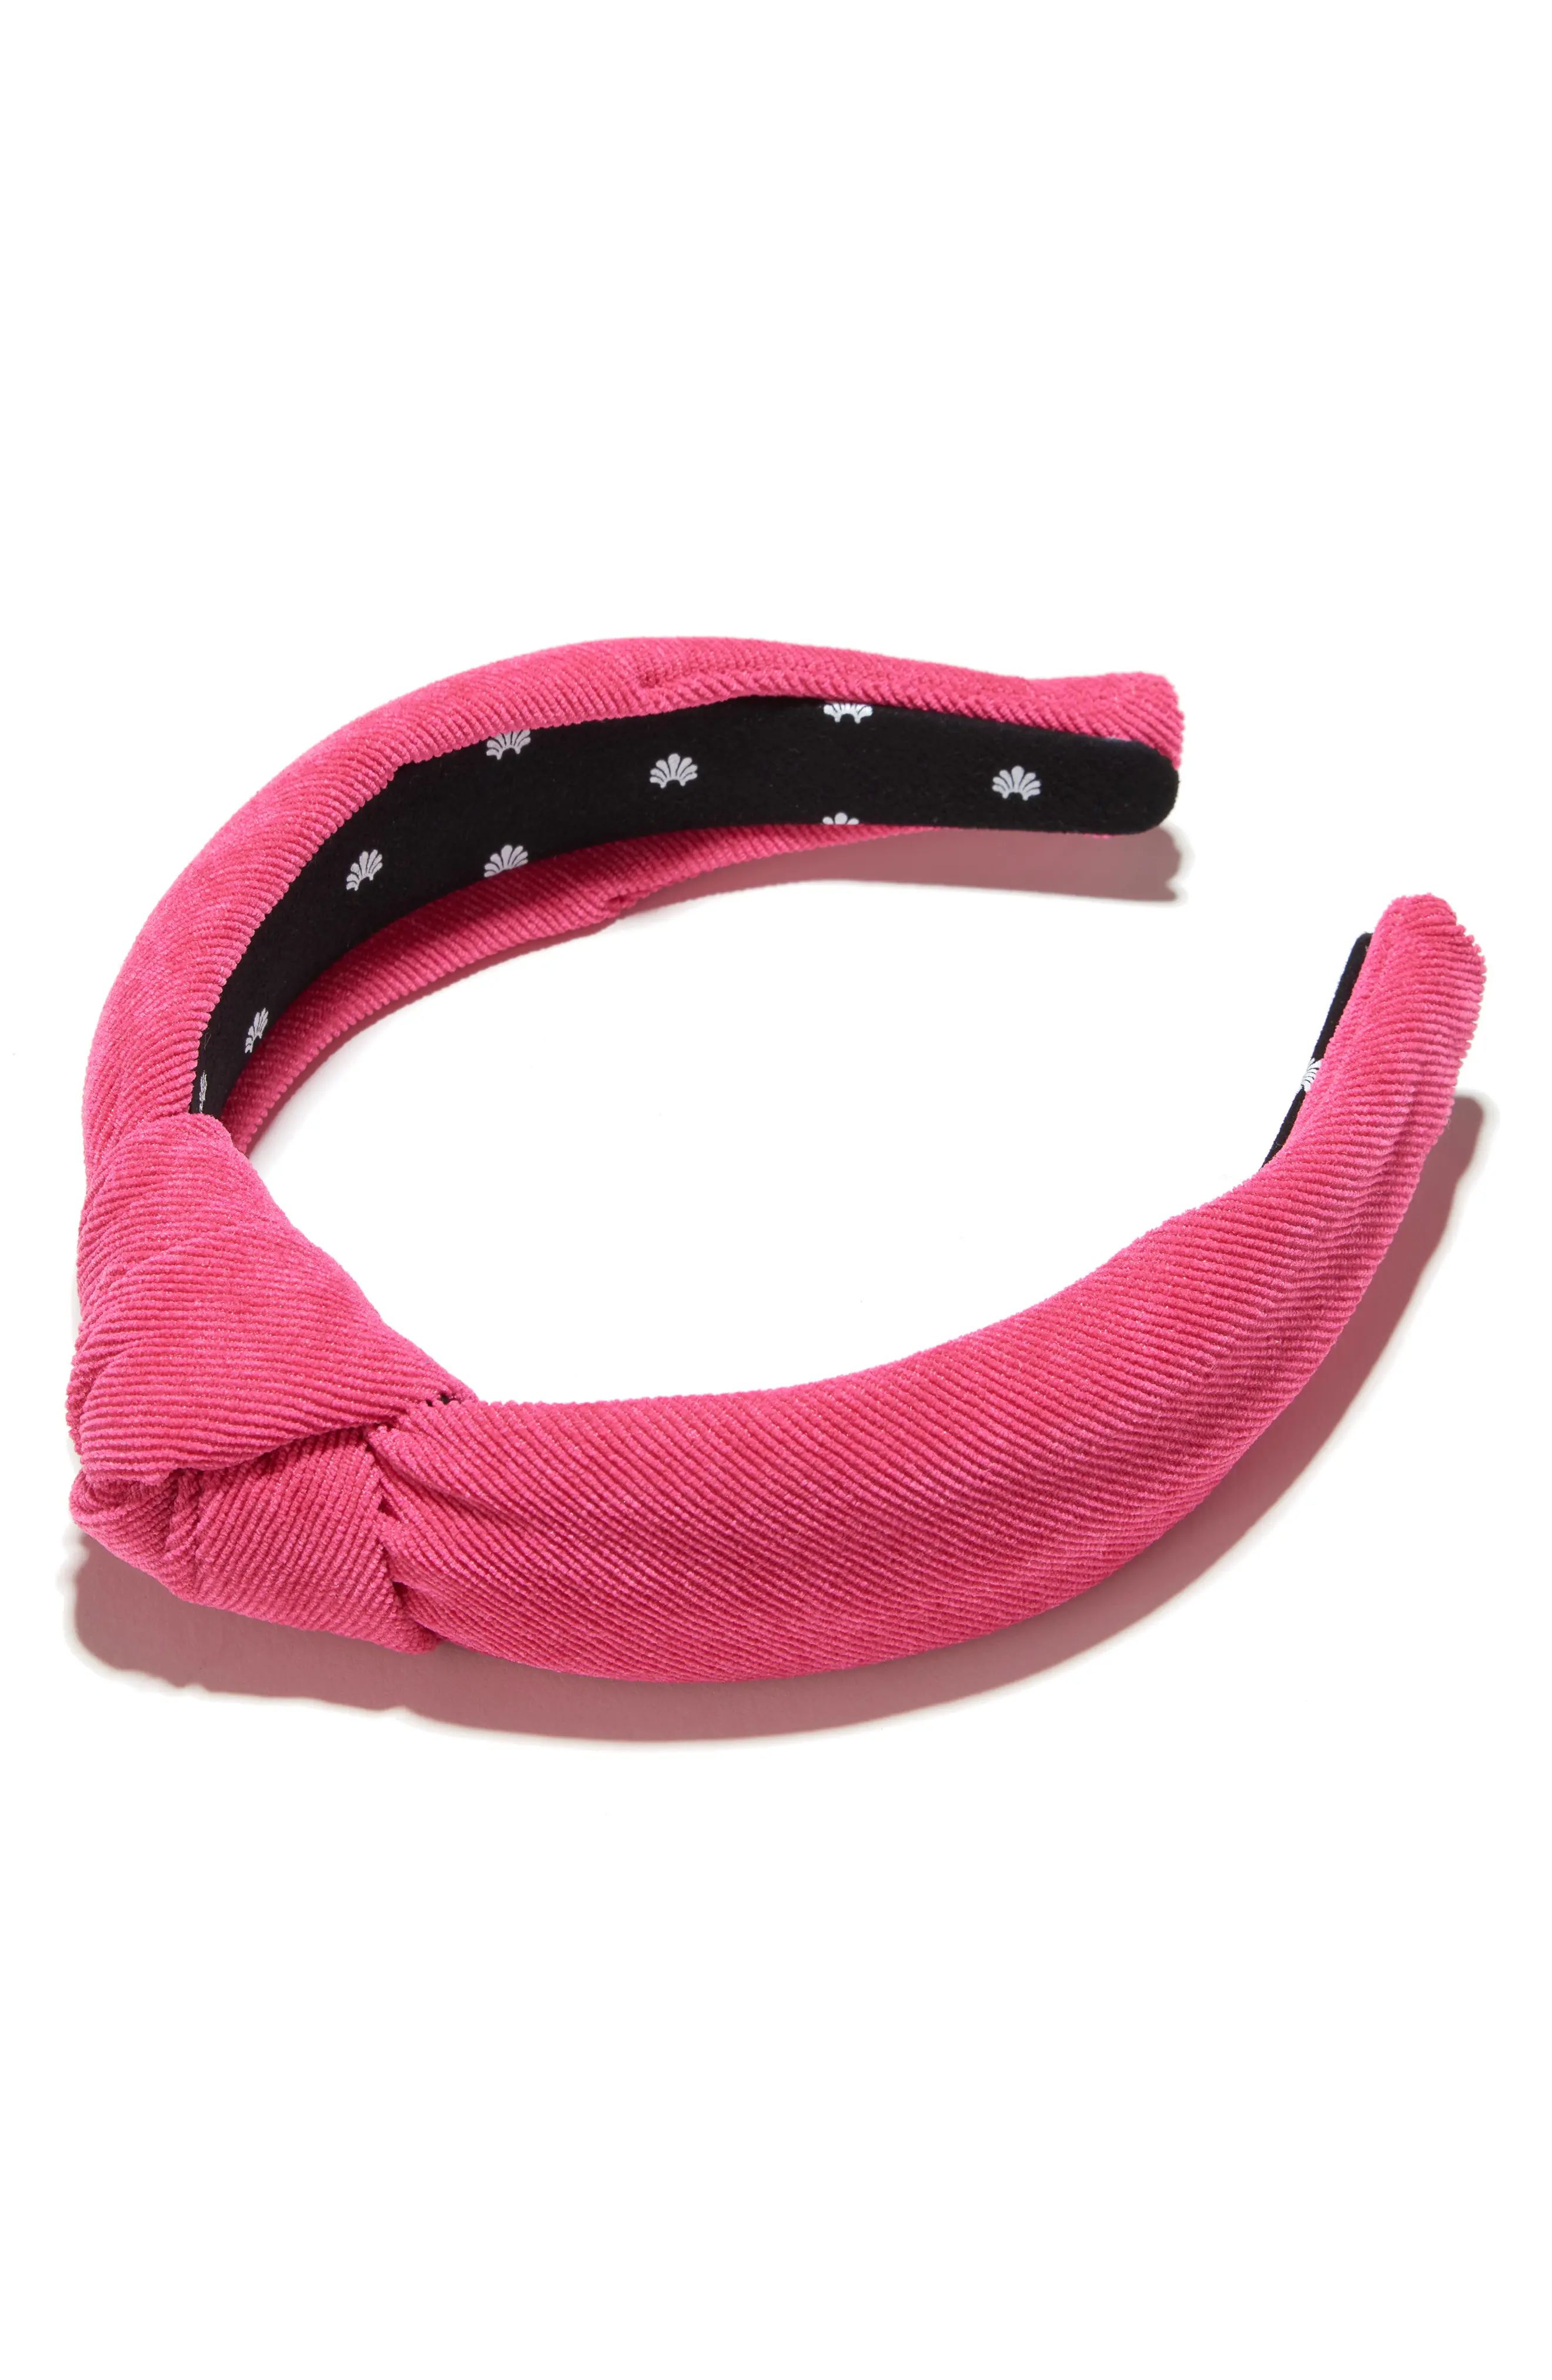 Lele Sadoughi Corduroy Knotted Headband, Size One Size - Pink | Nordstrom